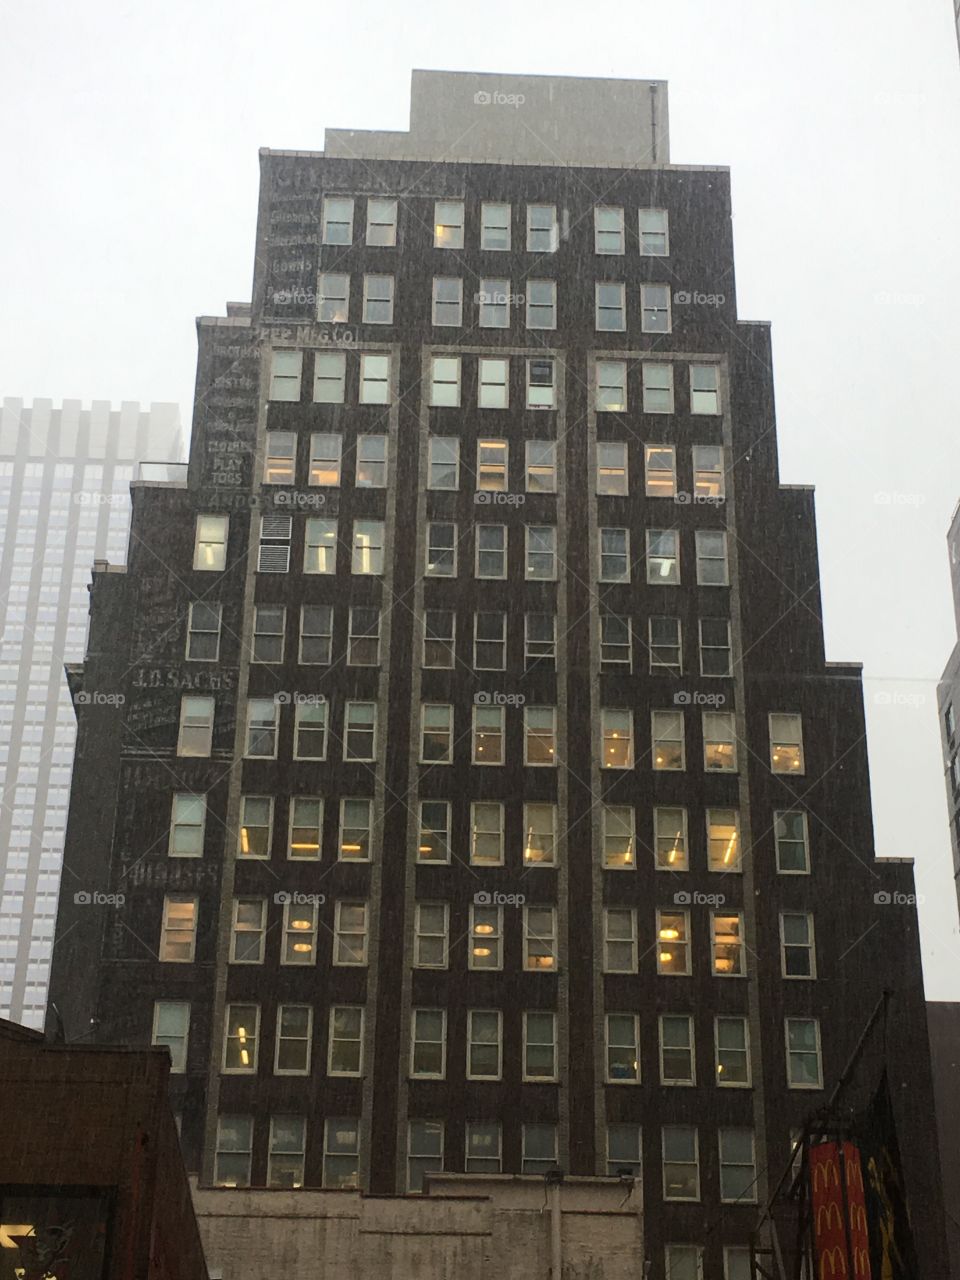 Rainy day in NYC